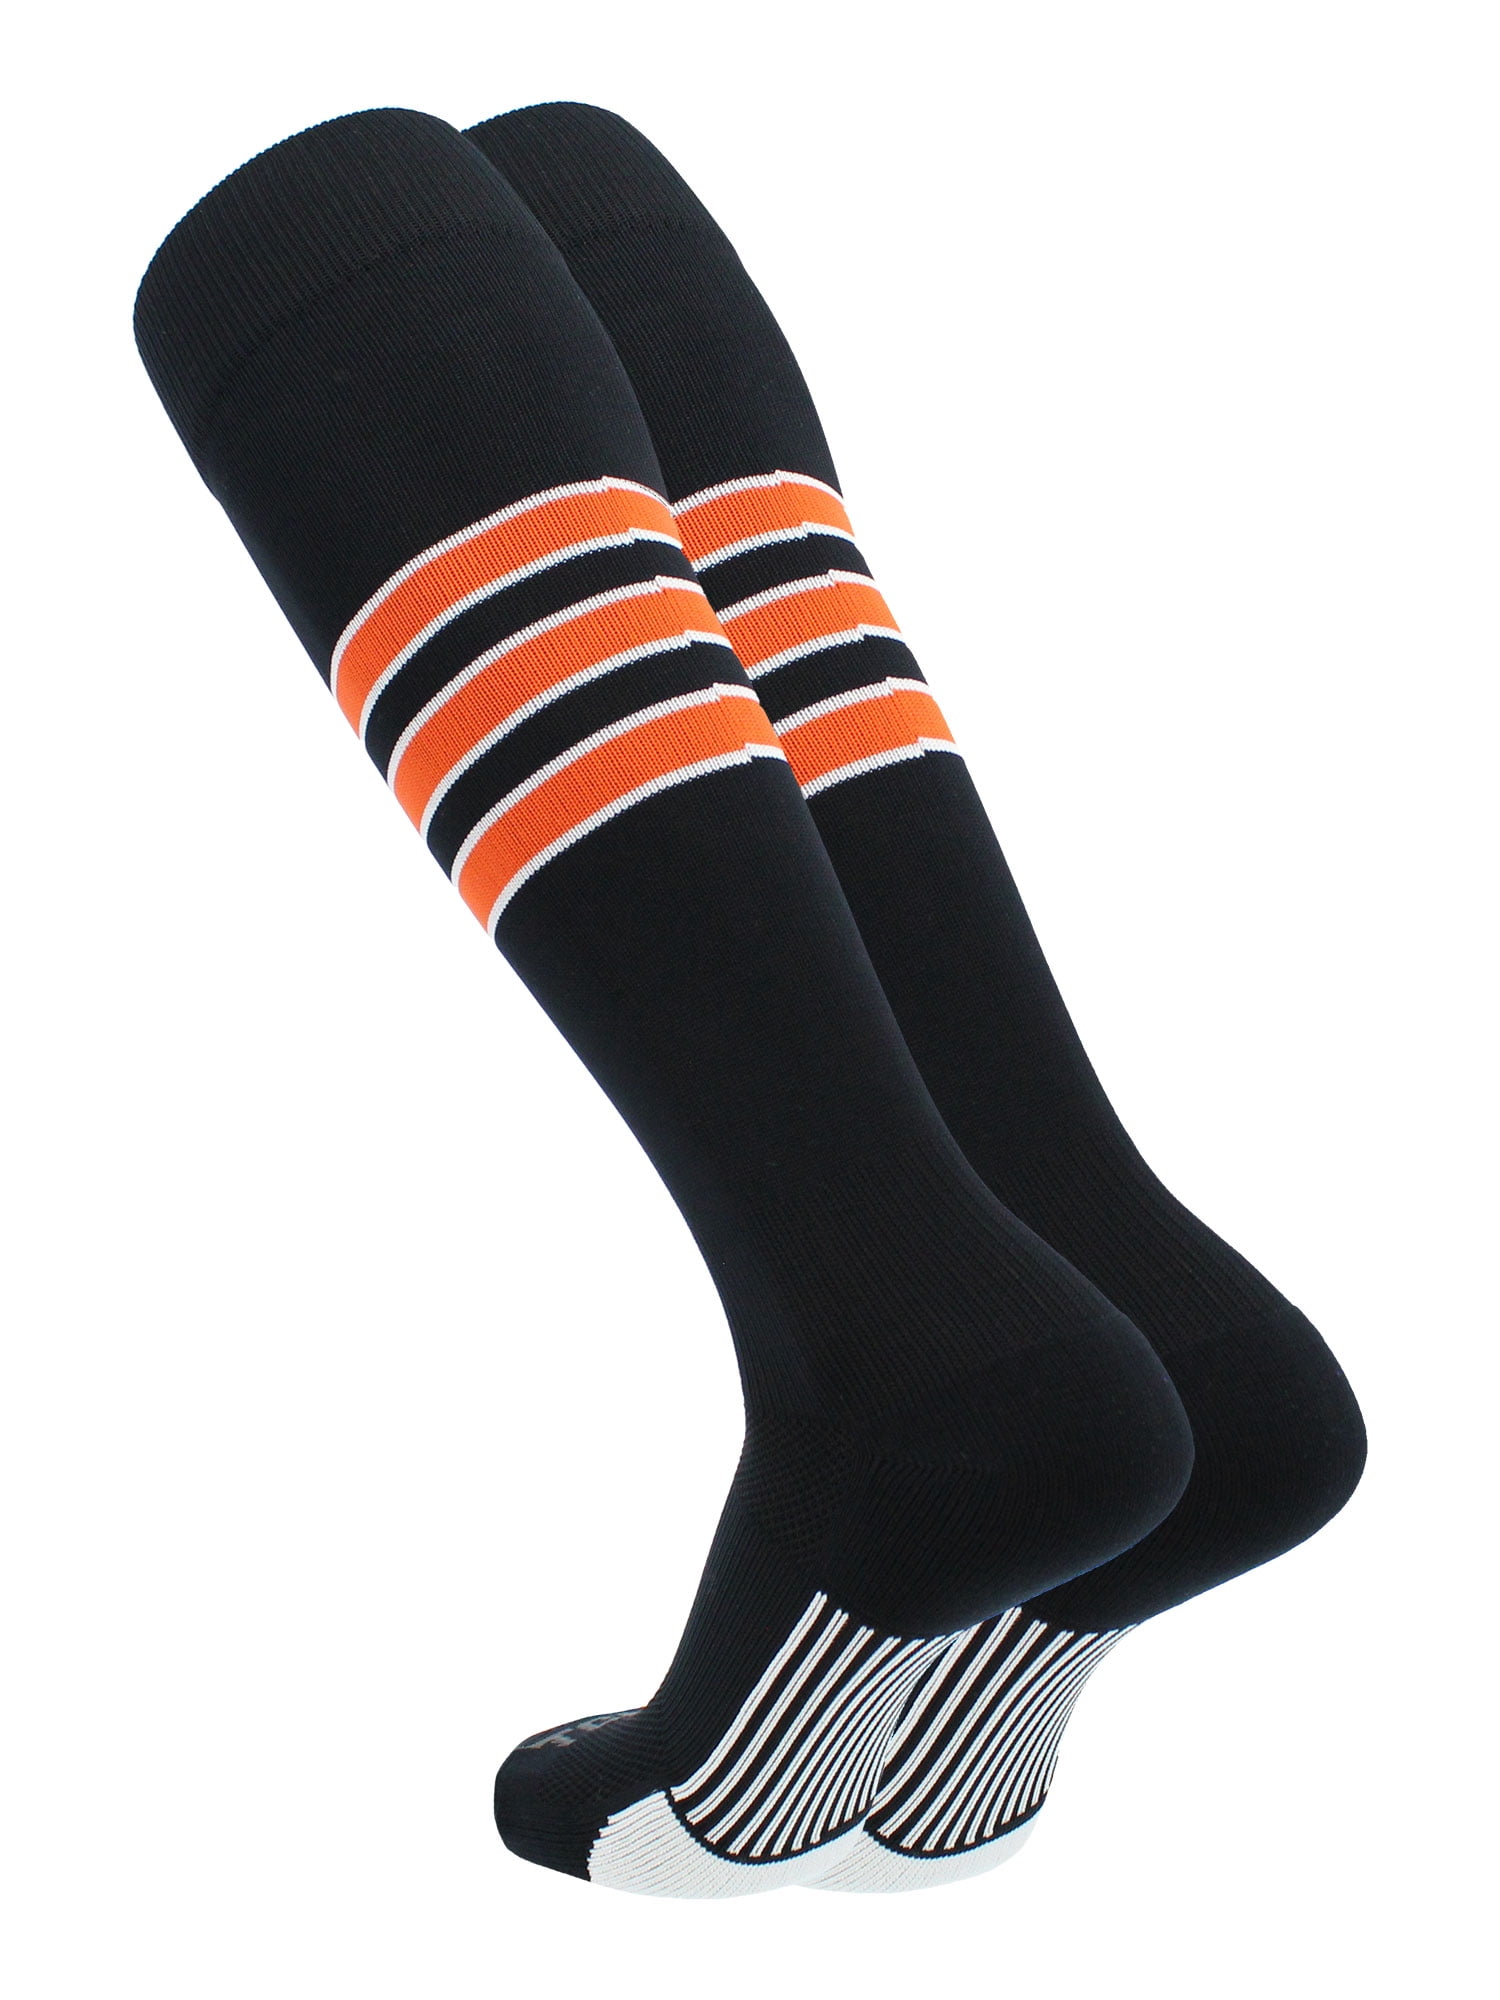 Novelty Softball Socks for Kids, Funny Softball Gifts for Sports